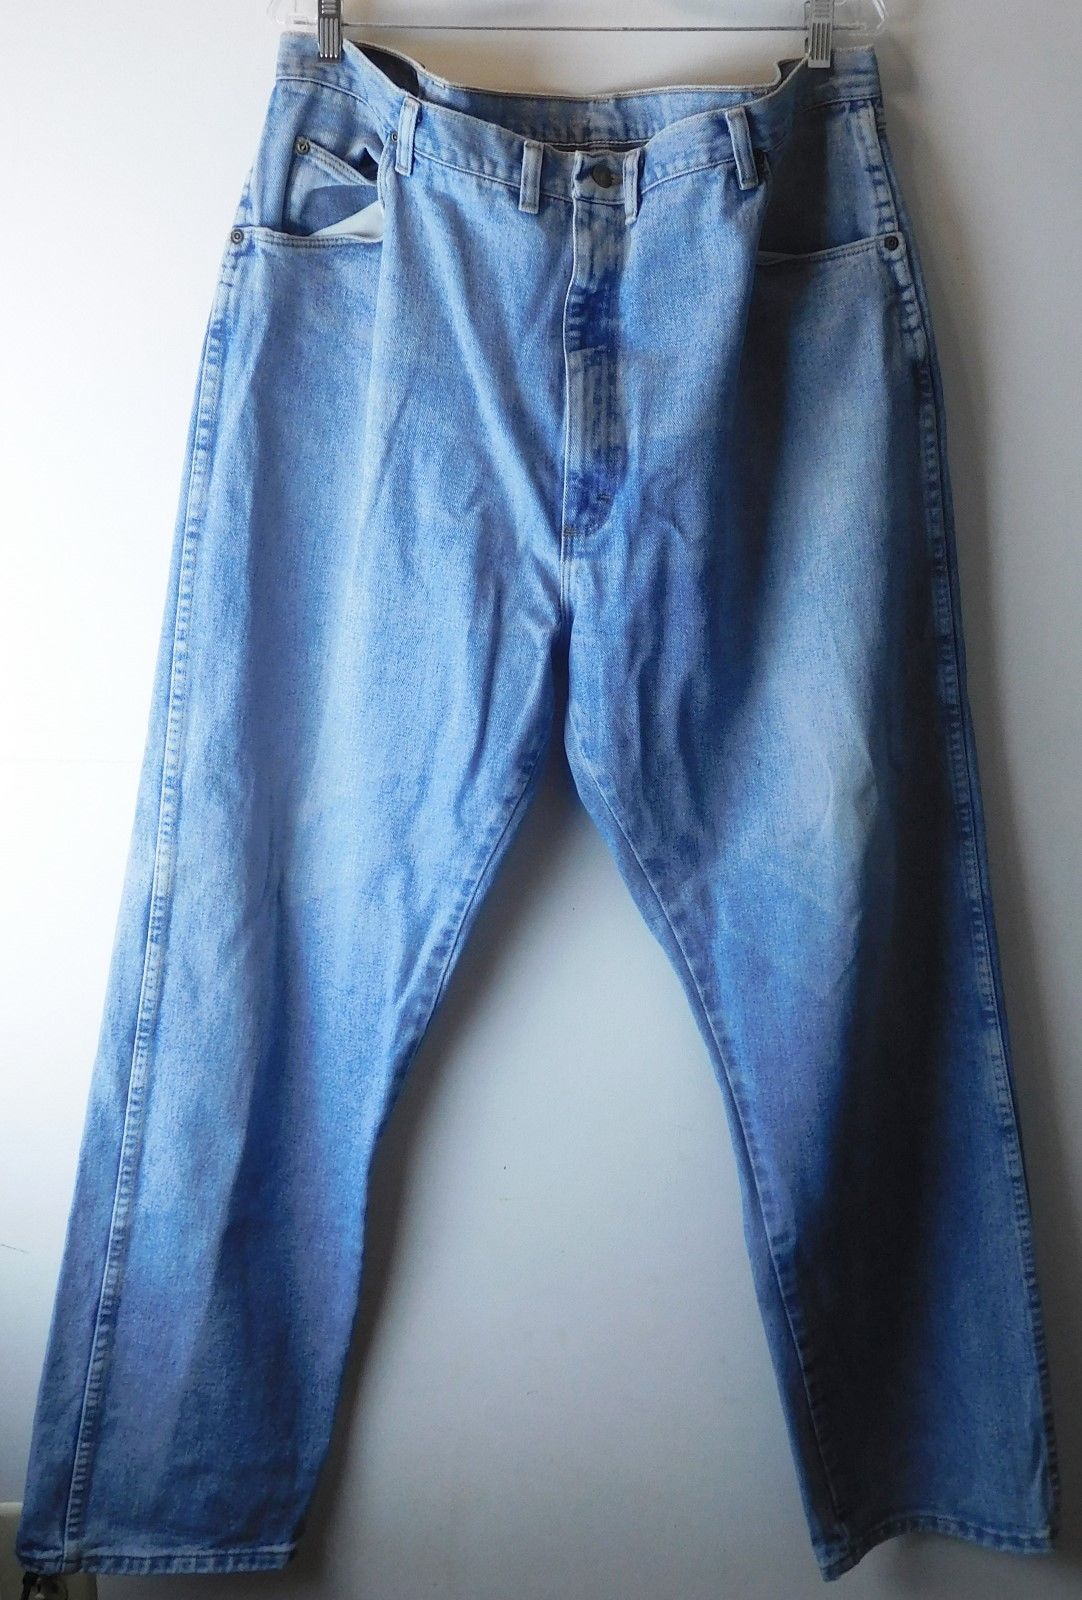 wrangler jeans 44 x 32